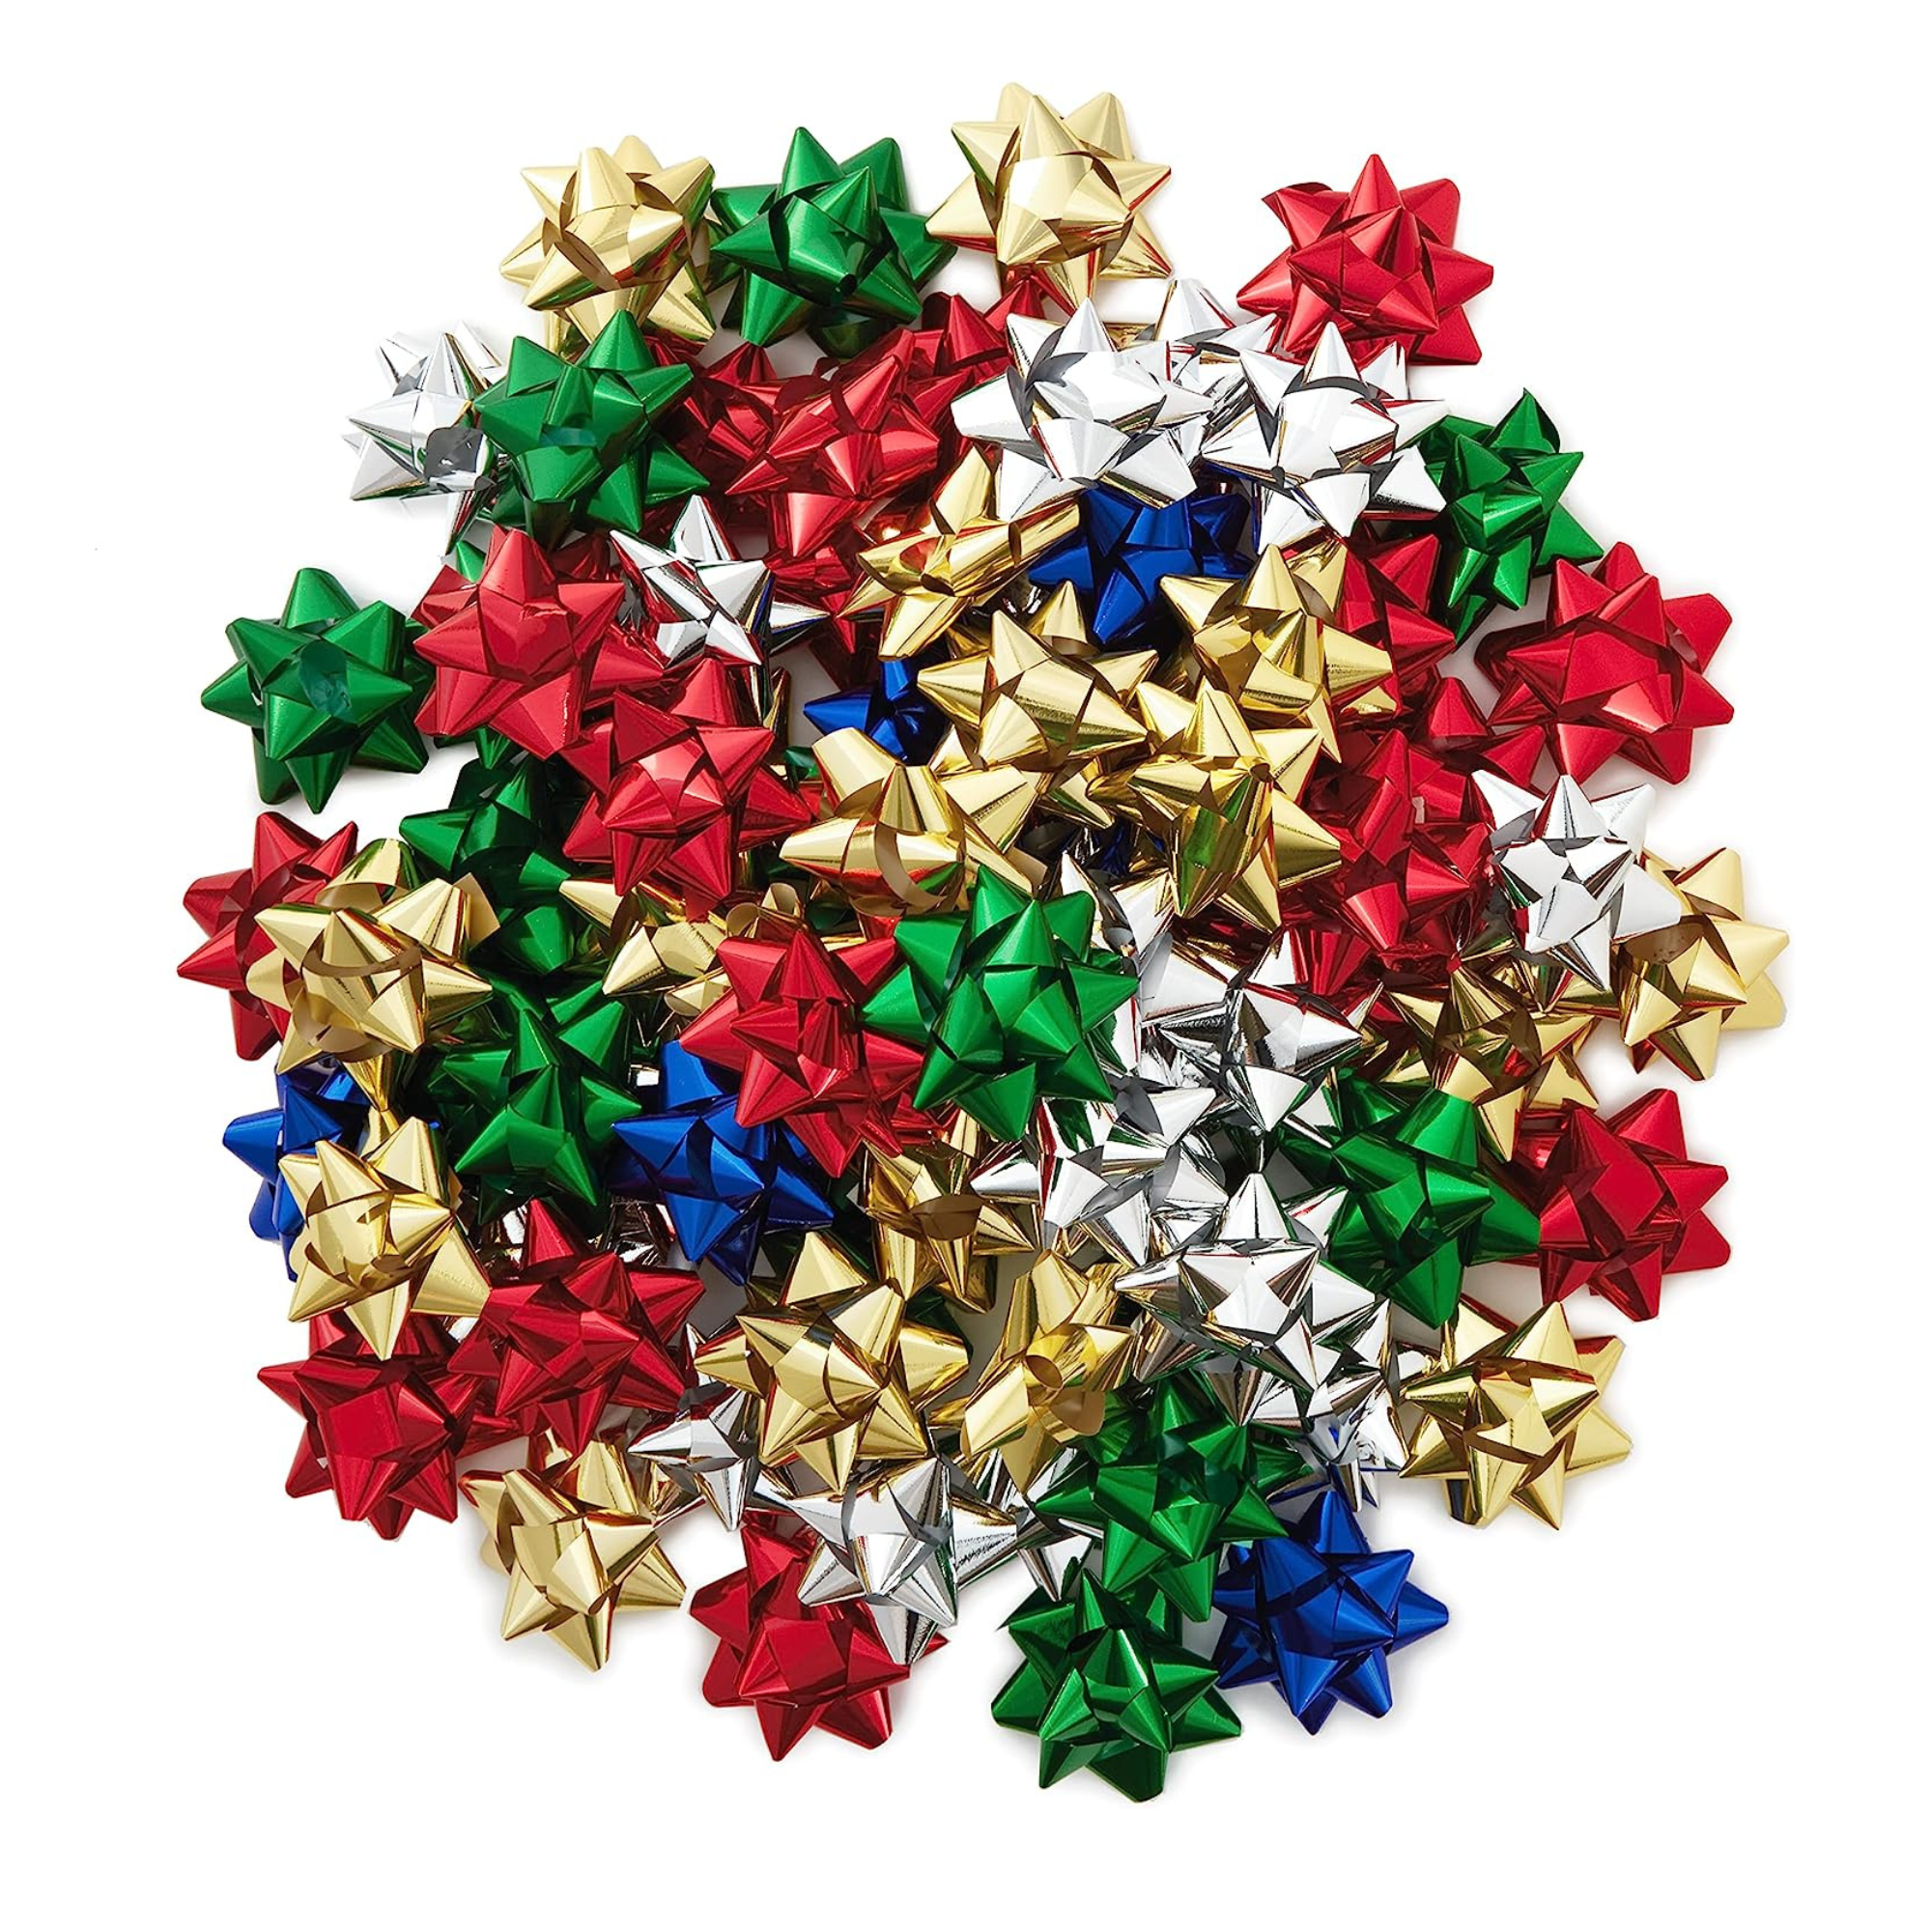 Hallmark 3 Gift Bow Holiday Assortment (75 Bows: Red, Gold, Green, Silver, Blue) for Christmas, Hanukkah, Birthdays, Presents